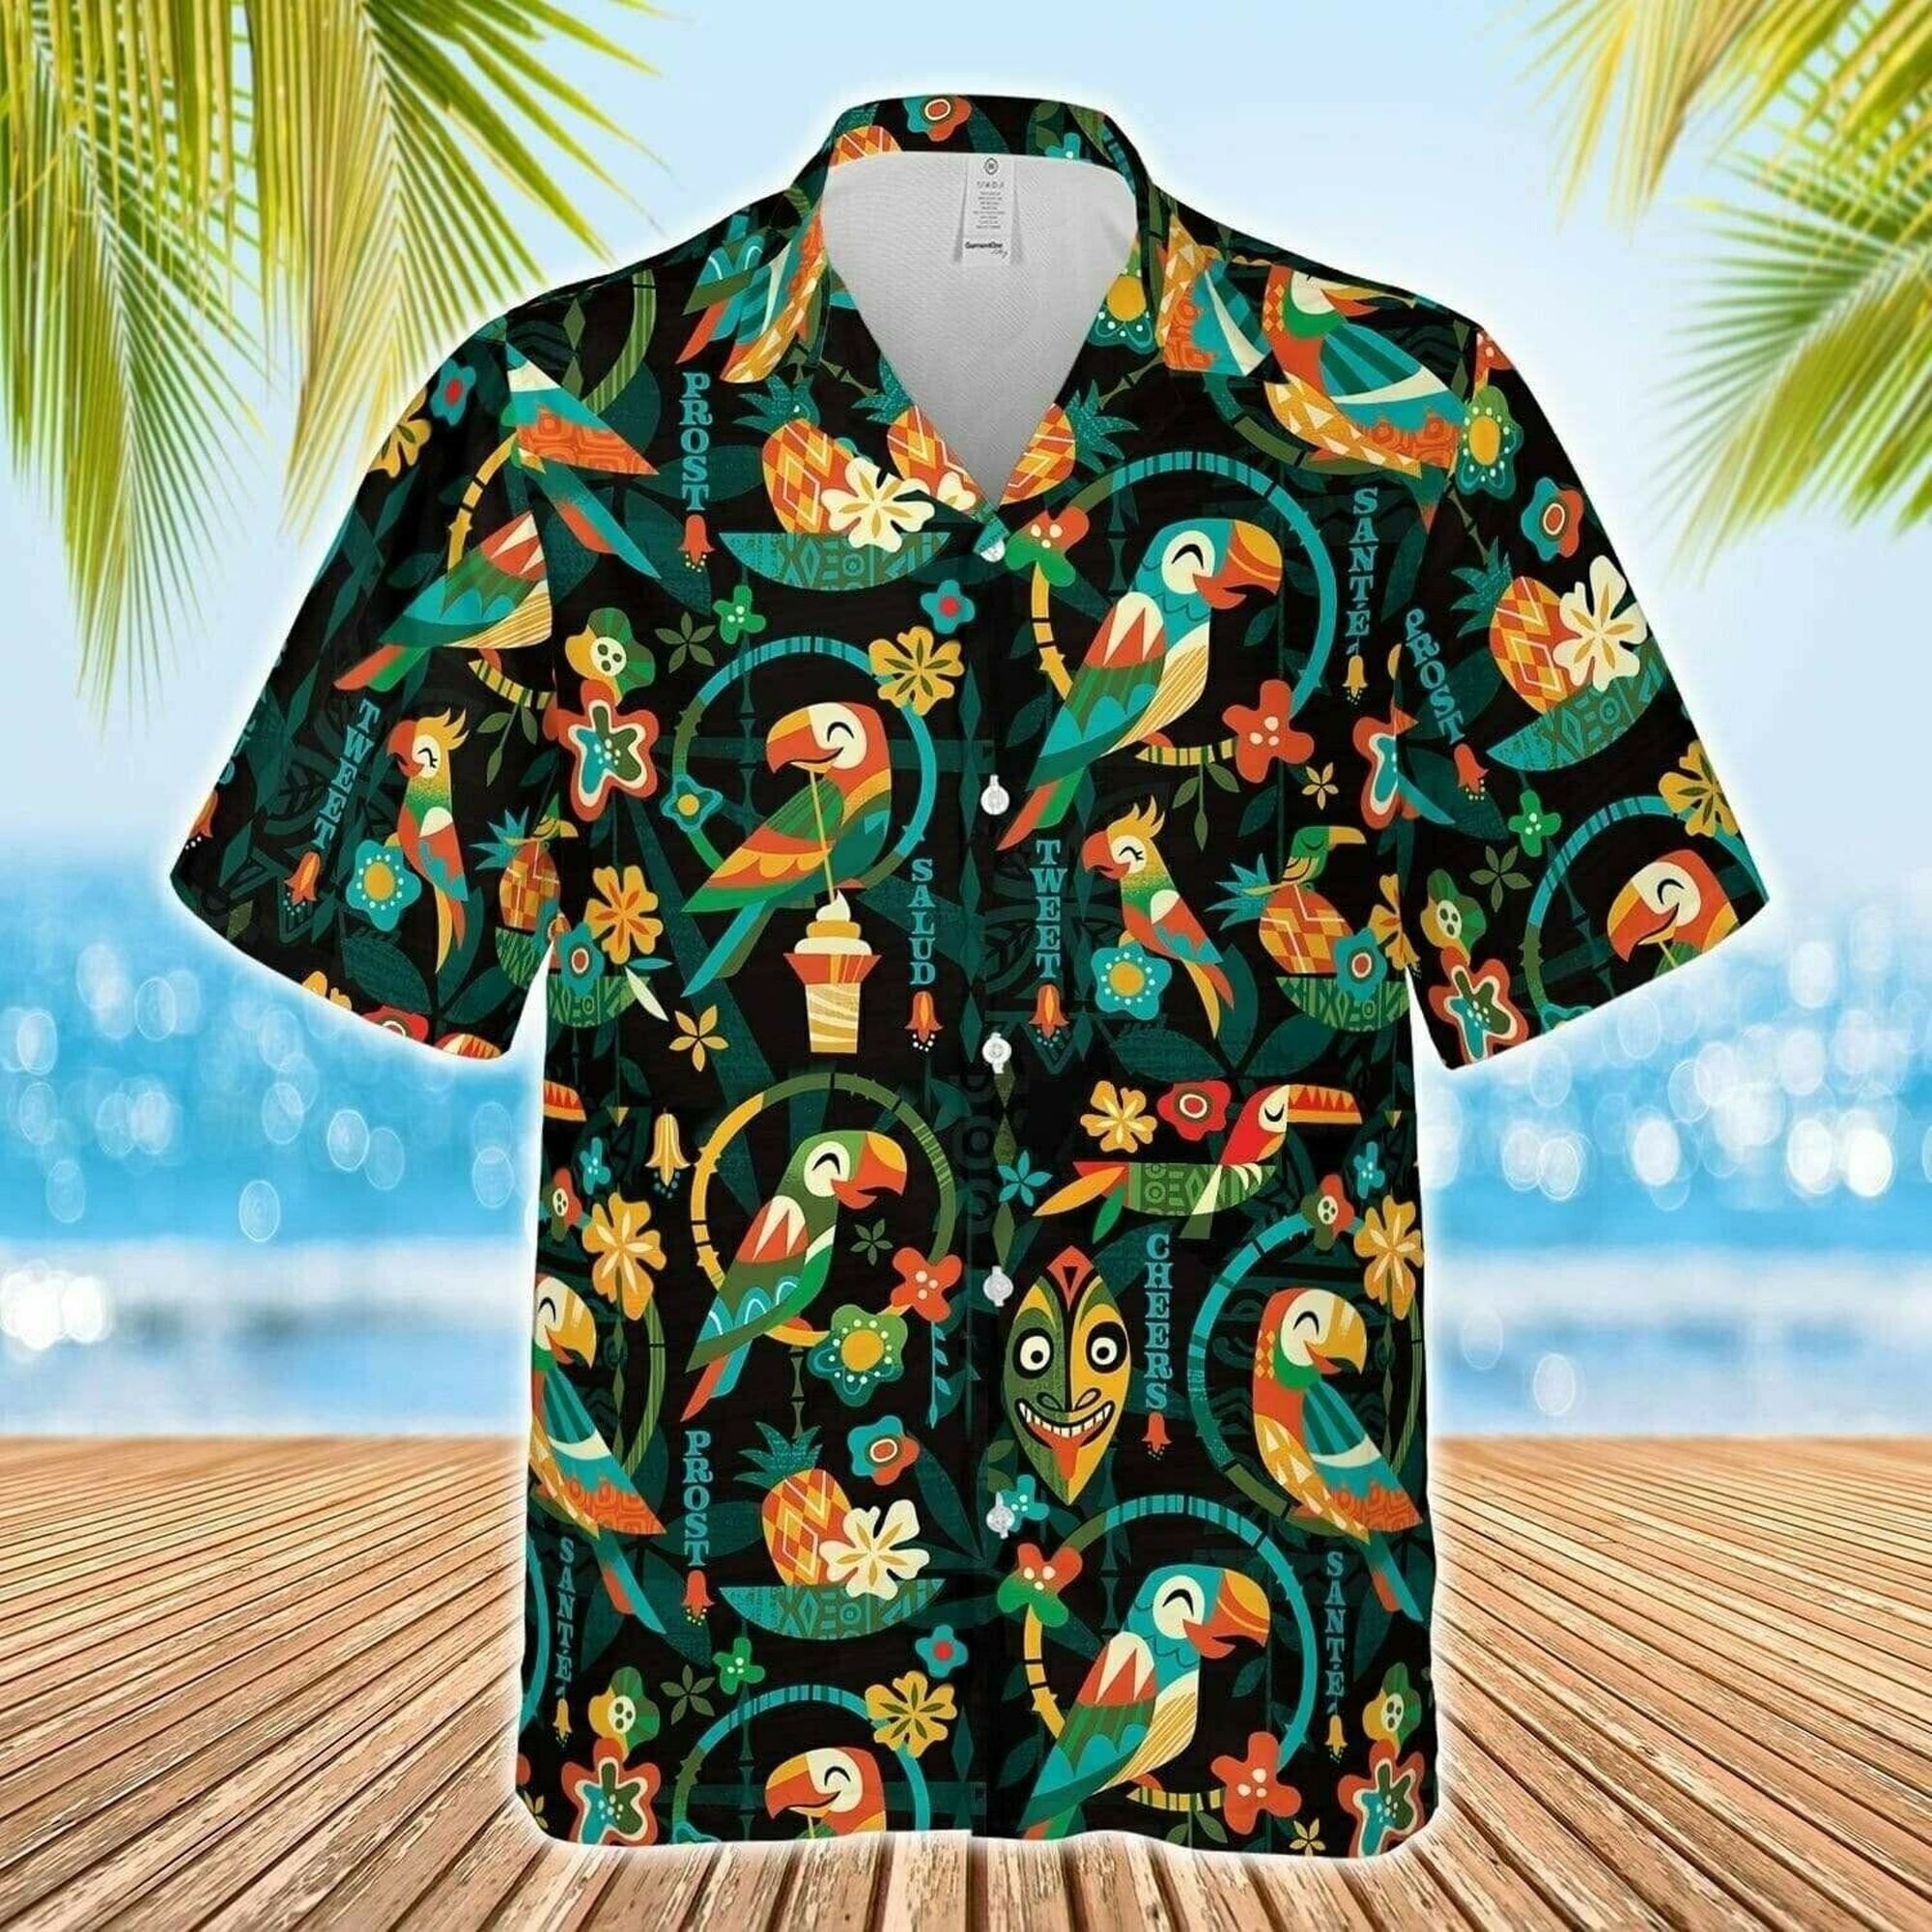 Discover Camicia Hawaiana Parrot Pappagallo Uomo Donna Bambini